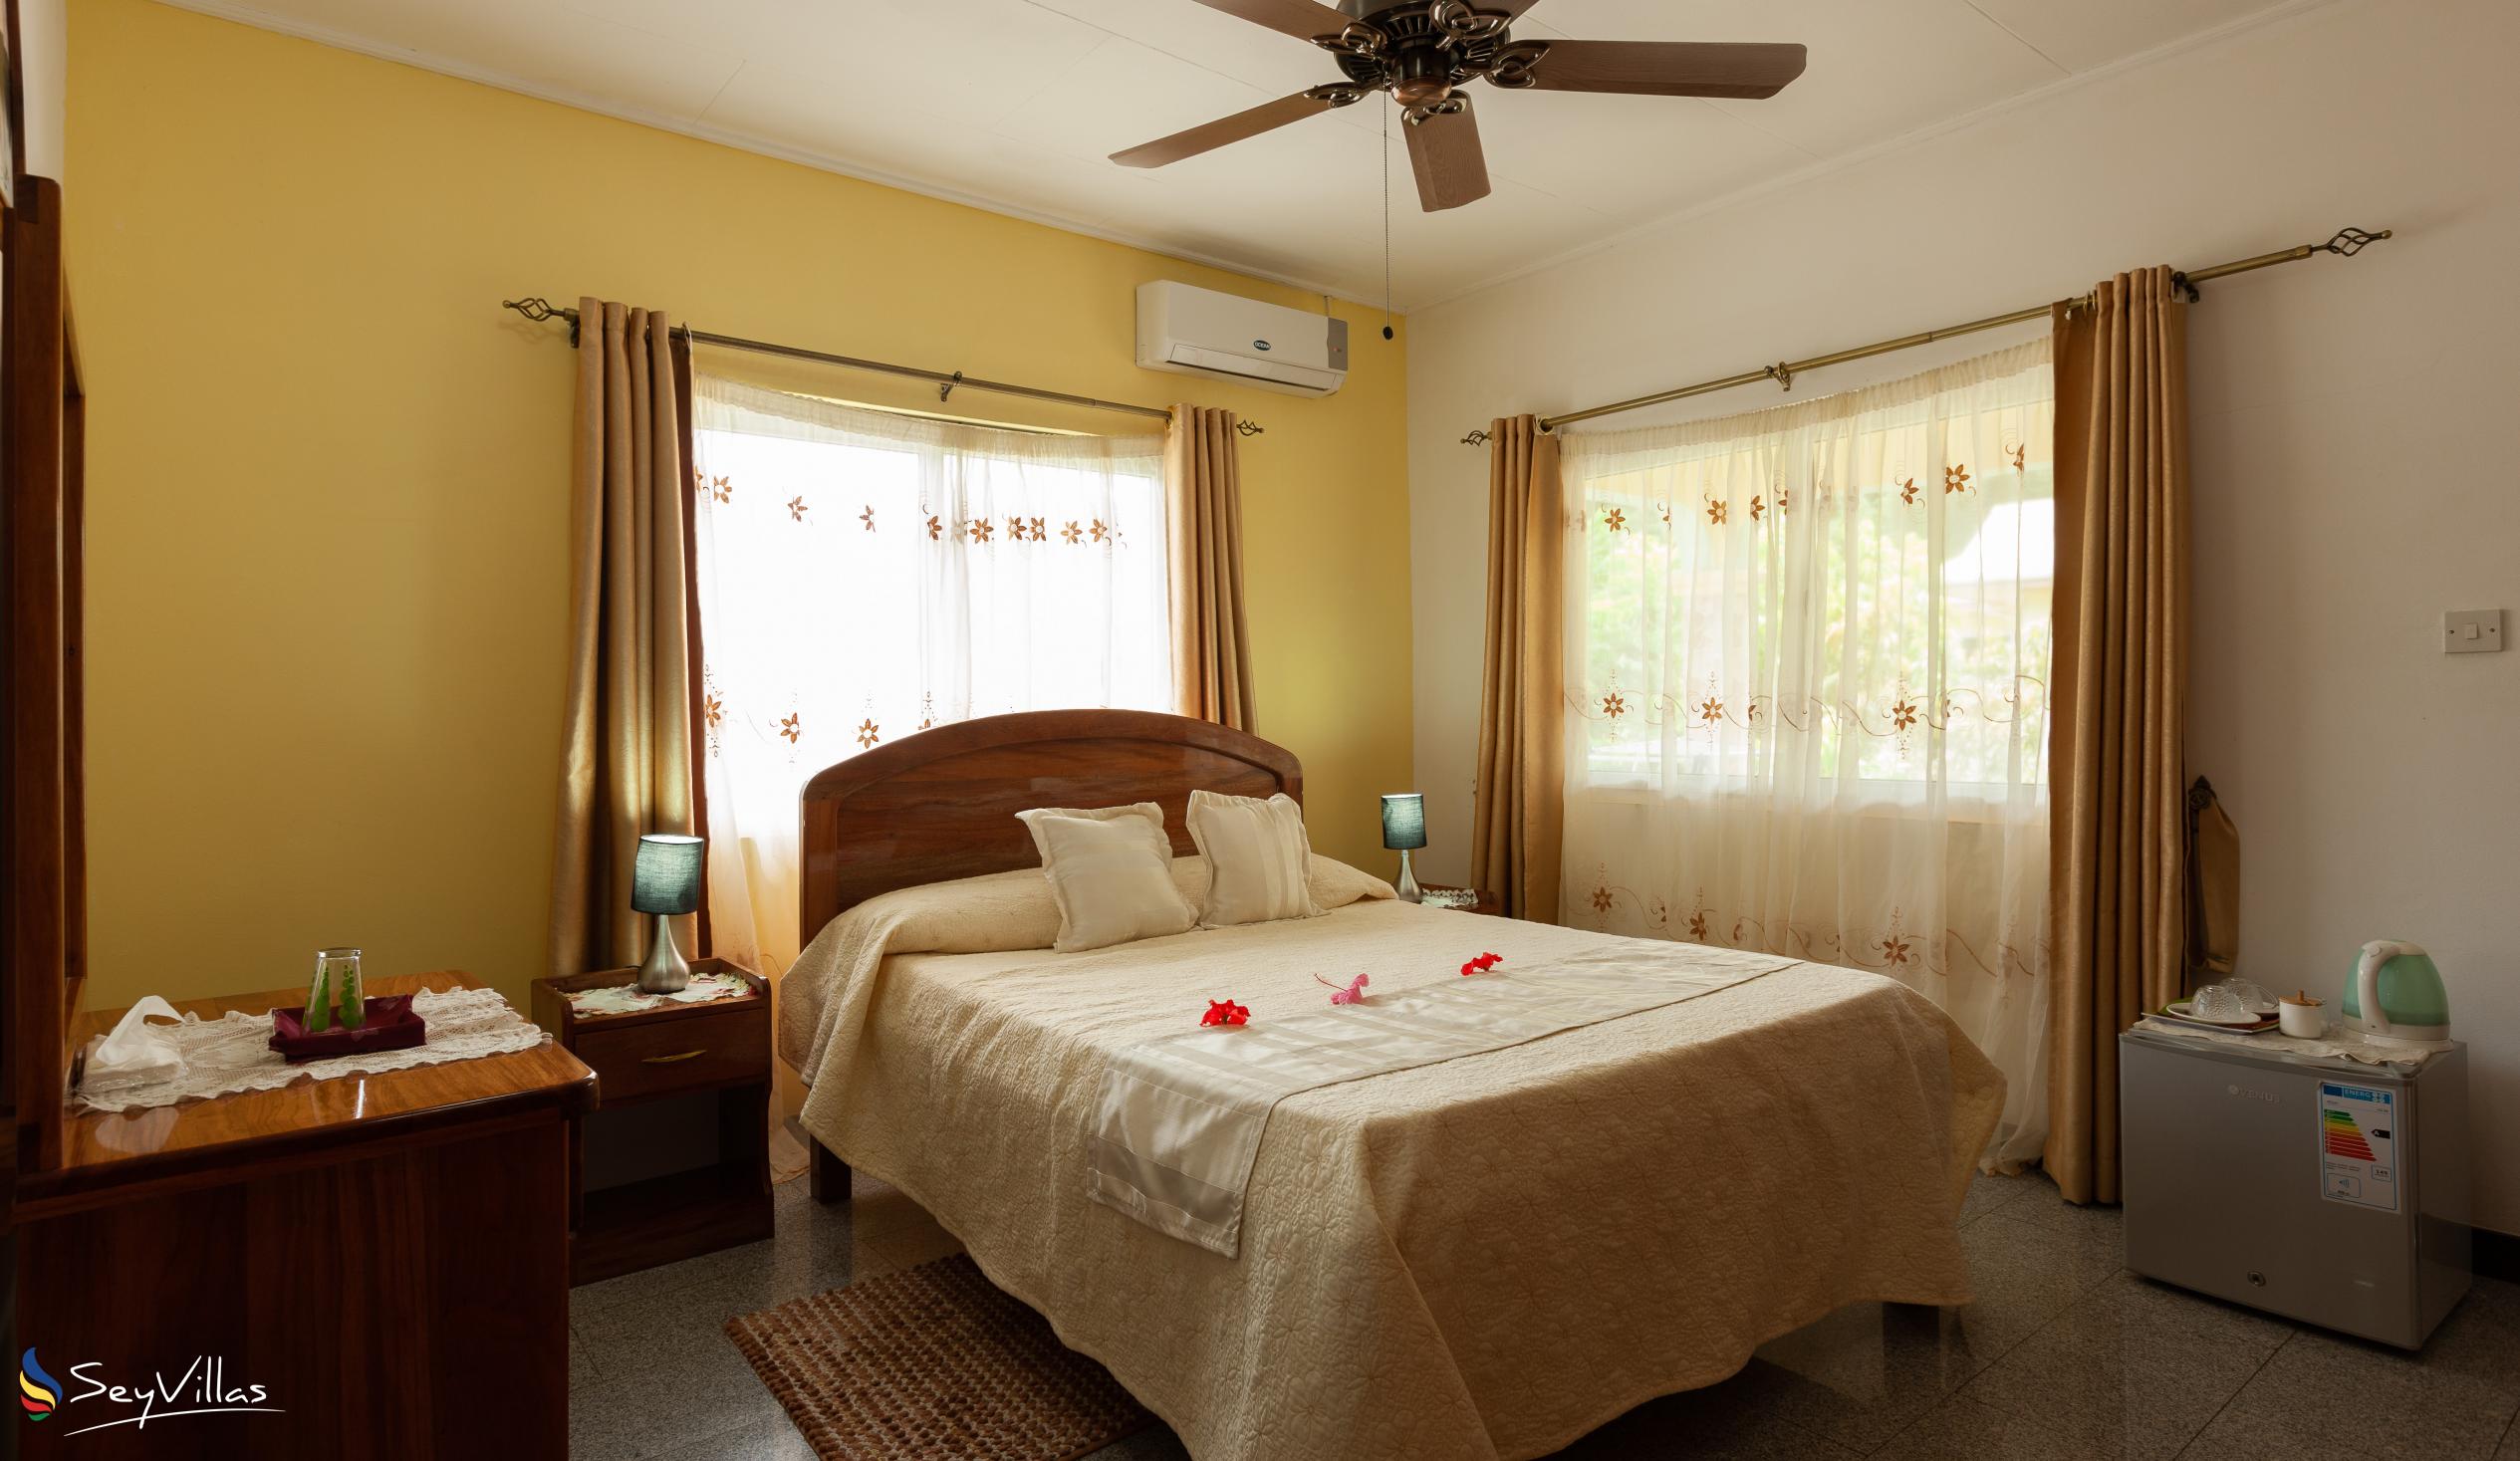 Photo 121: Villa Bananier - Superior Room - Praslin (Seychelles)